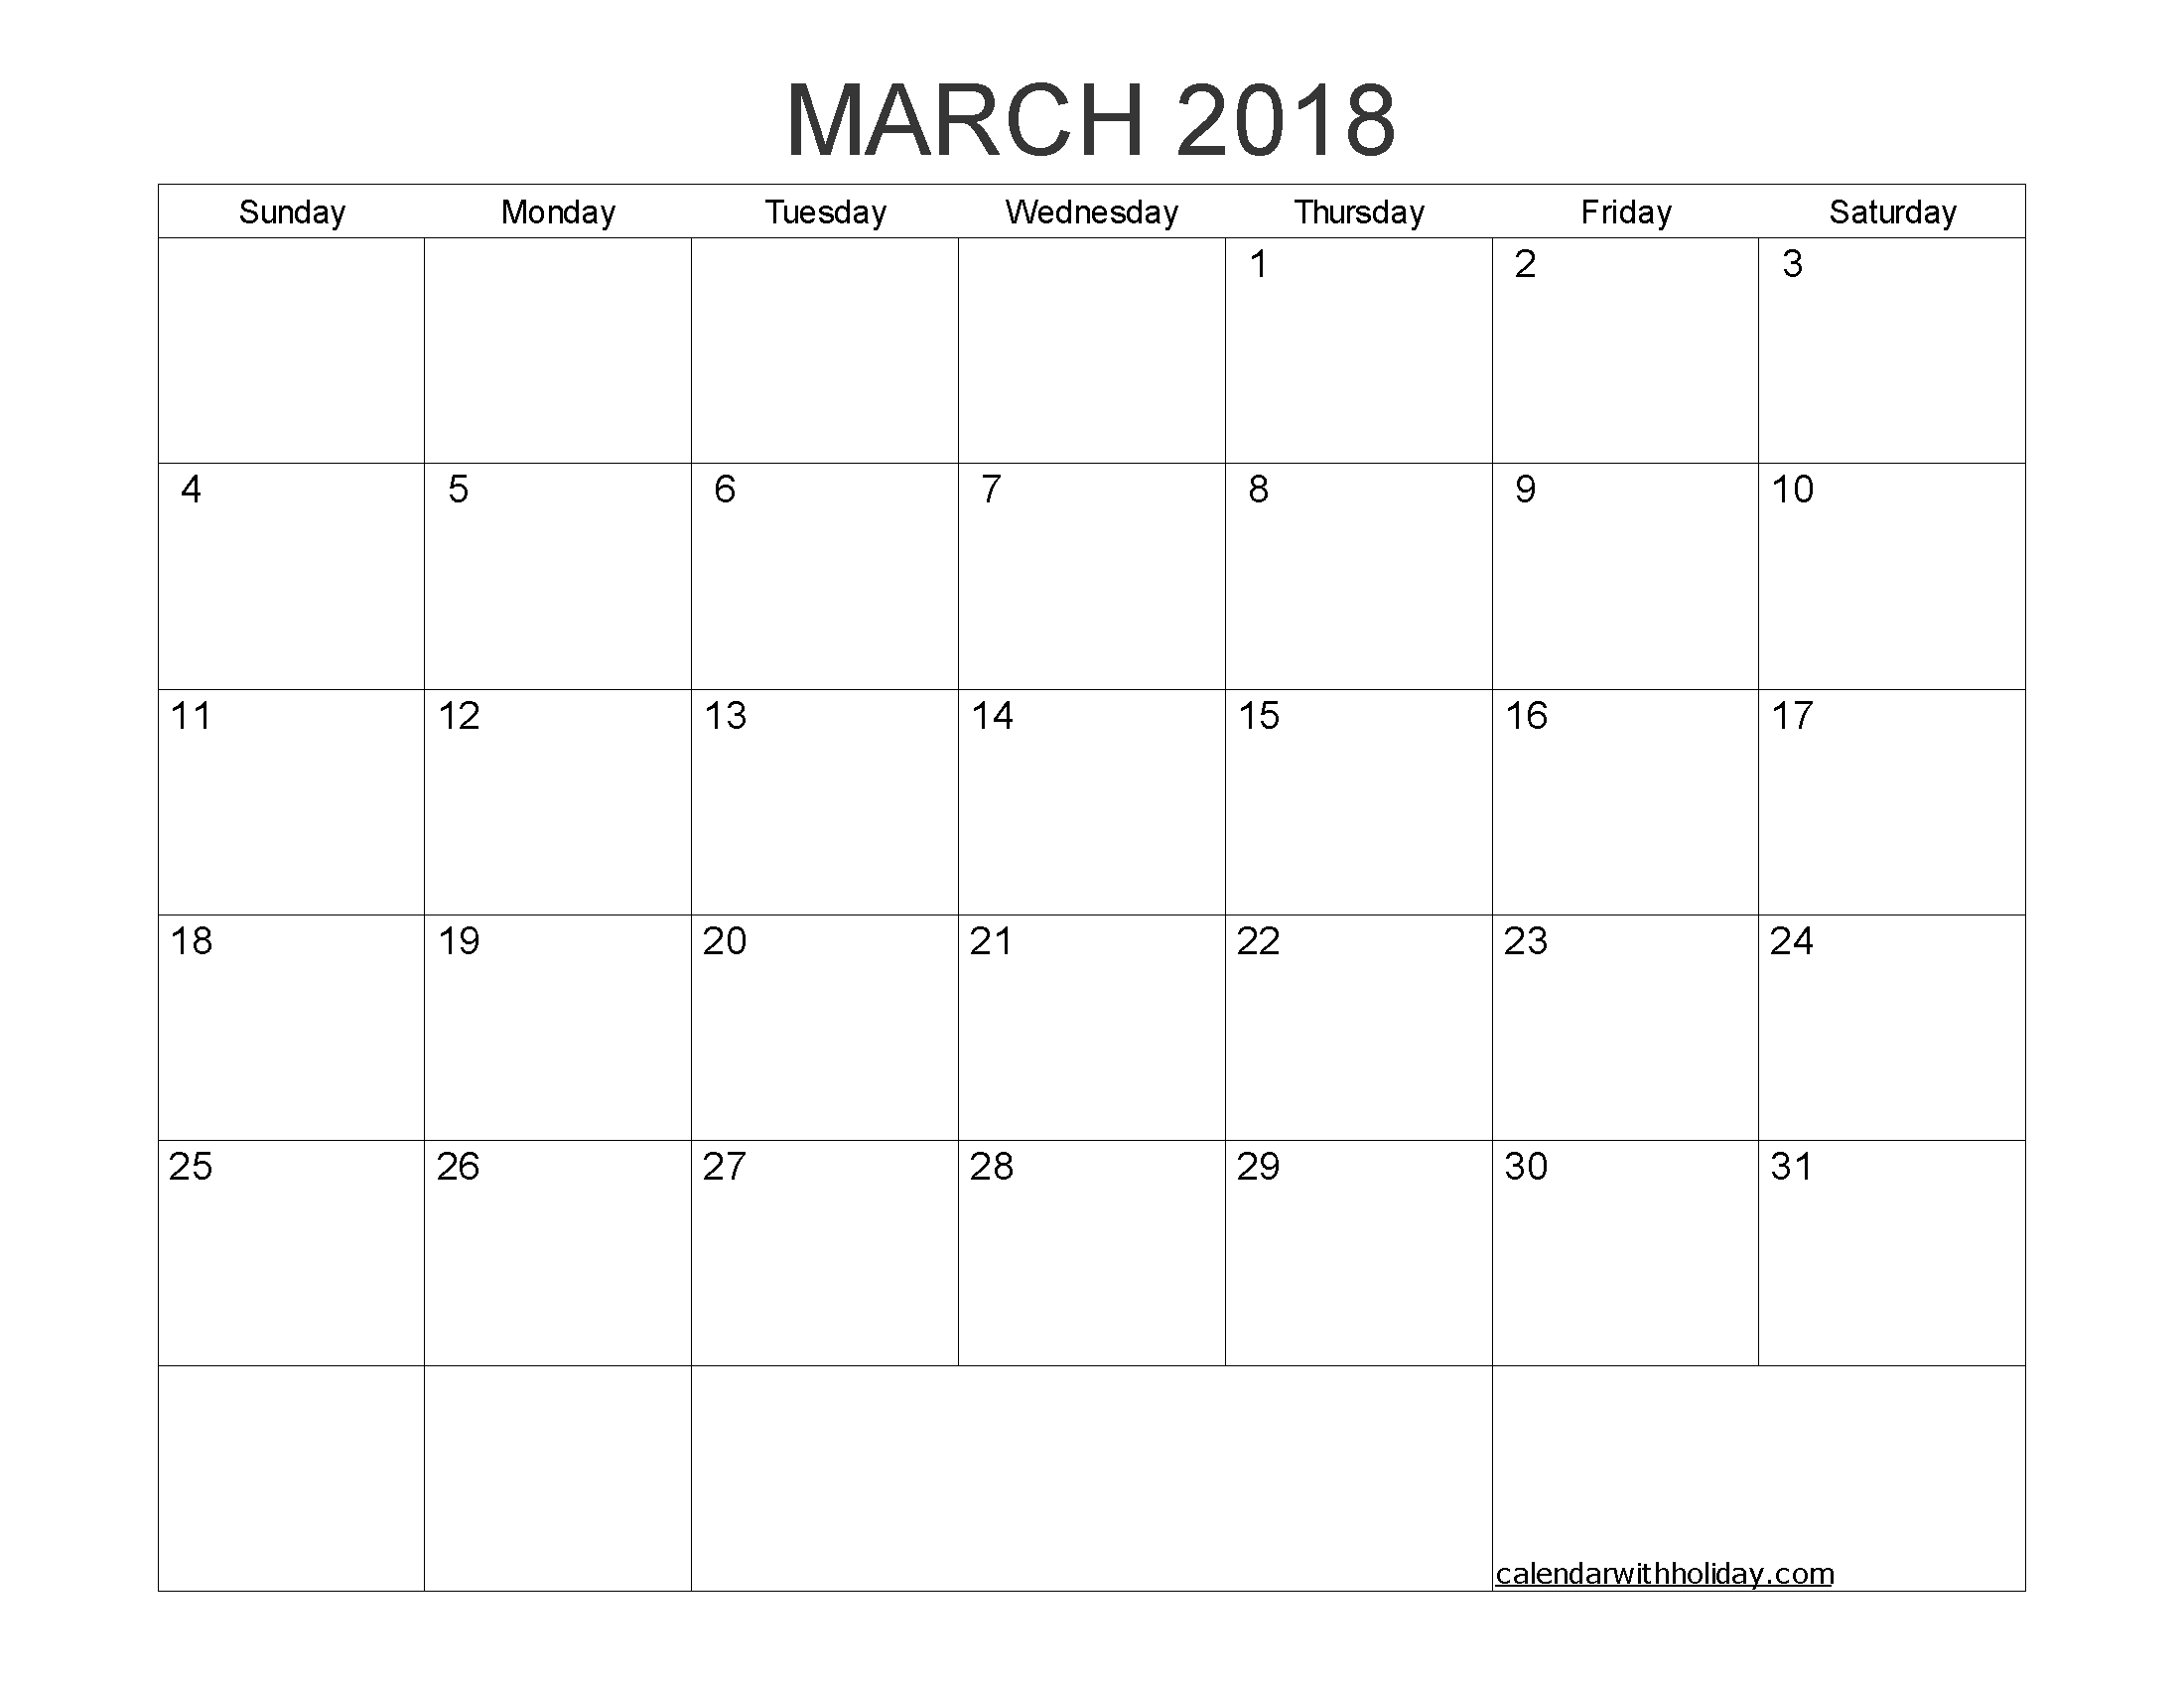 March 2018 Blank Calendar Printable Pdf, Word, Image | Free Blank Calendar High Resolution